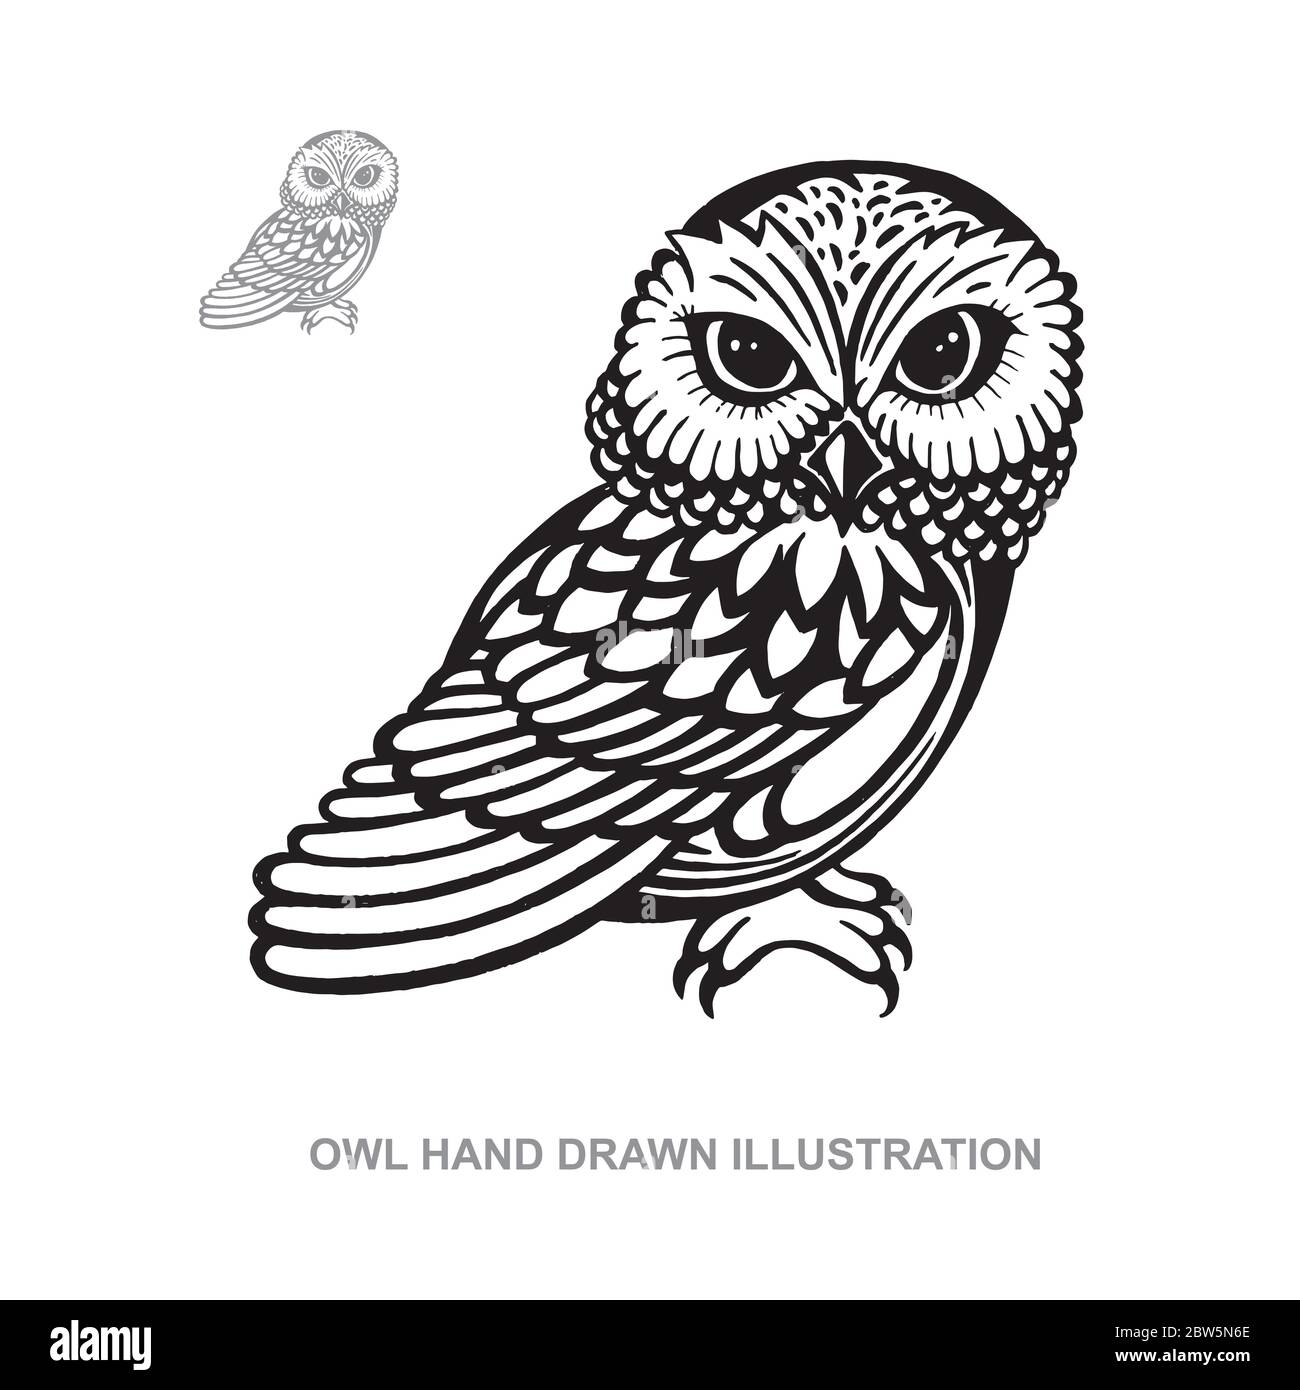 10+ Owl Drawings, Art Ideas